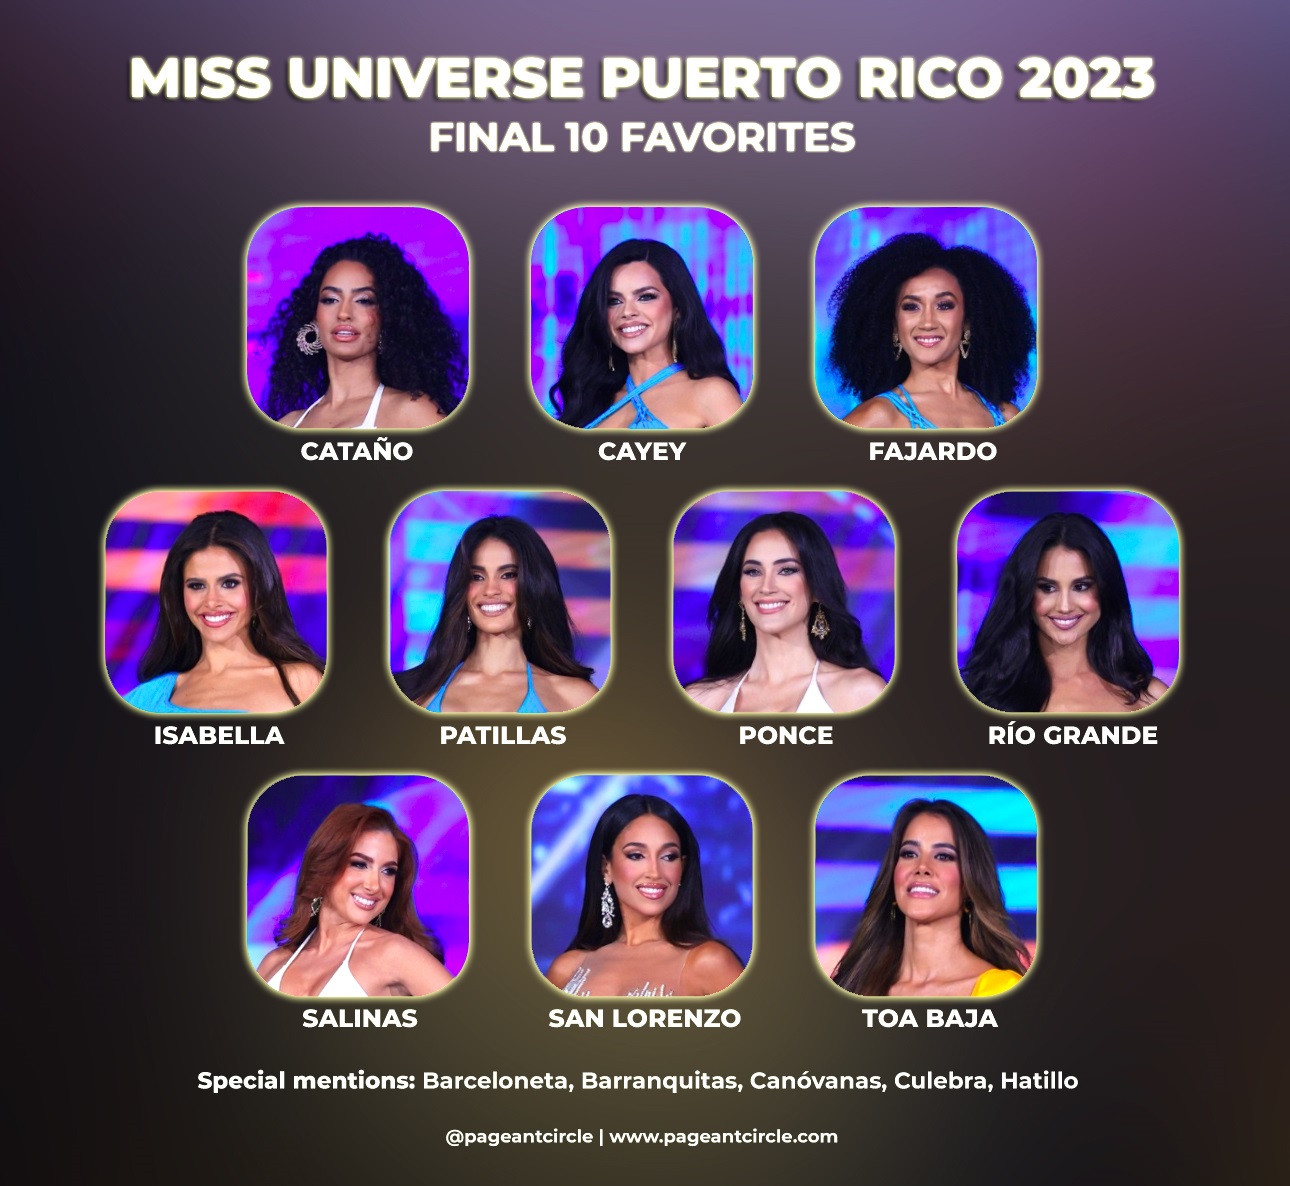 Favorites Miss Universe Puerto Rico 2023 Final Top 10 Favorites